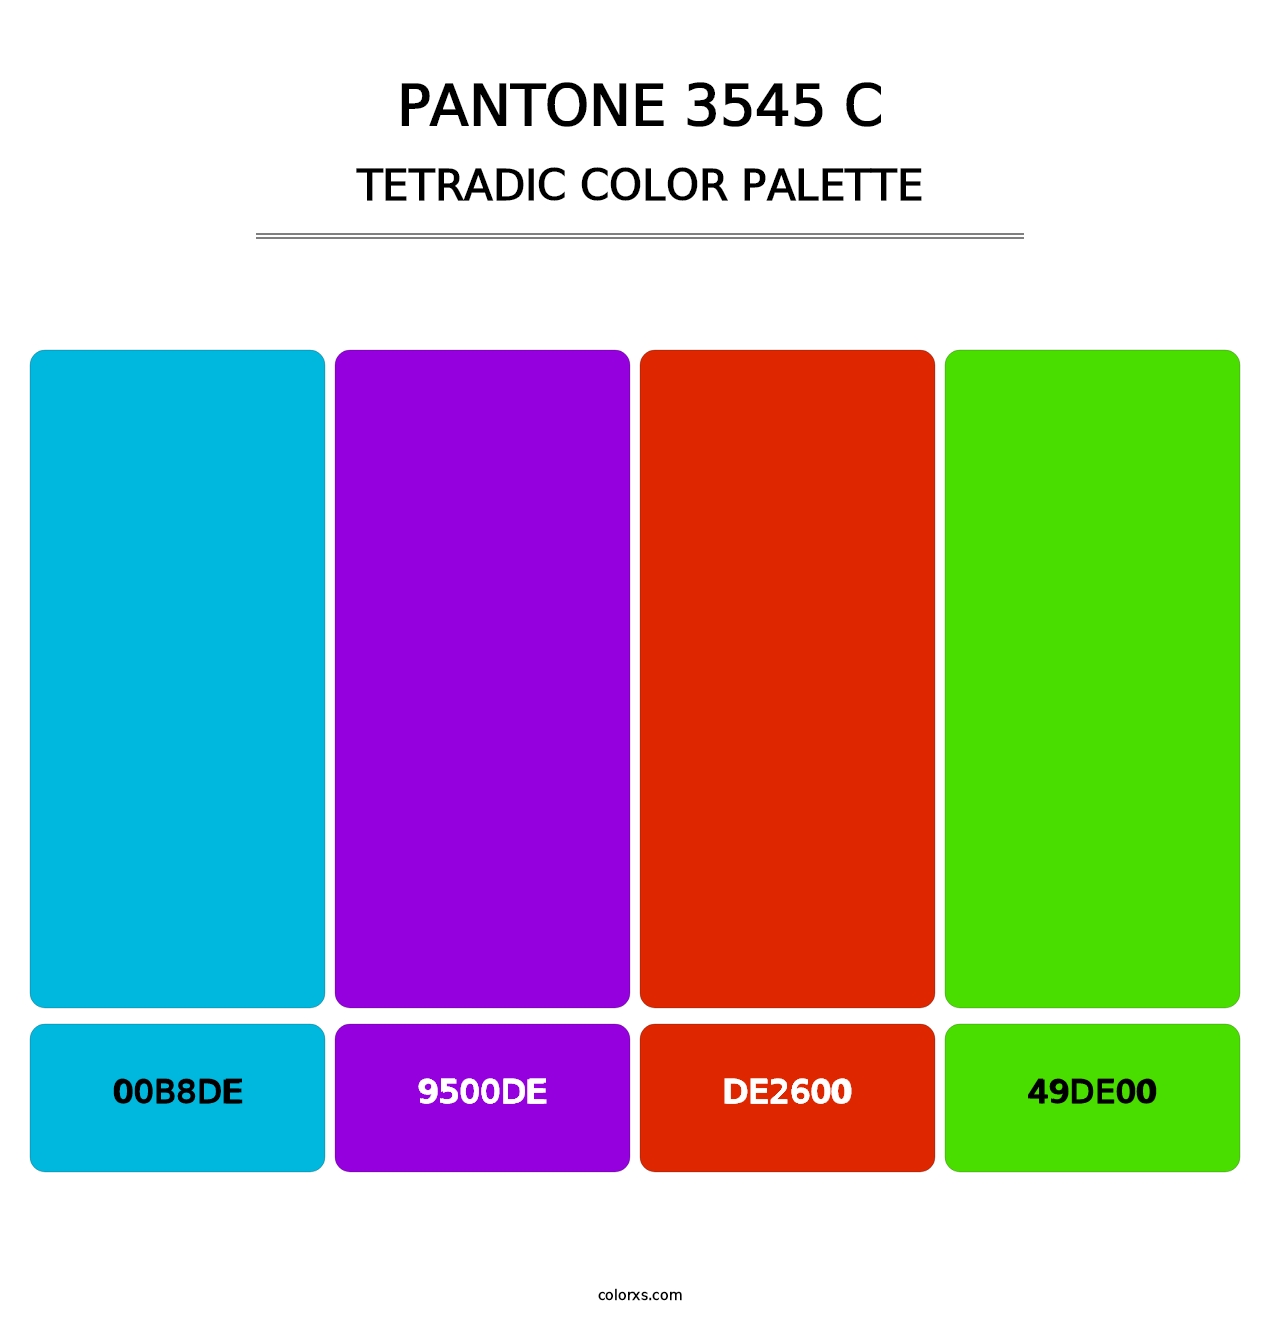 PANTONE 3545 C - Tetradic Color Palette